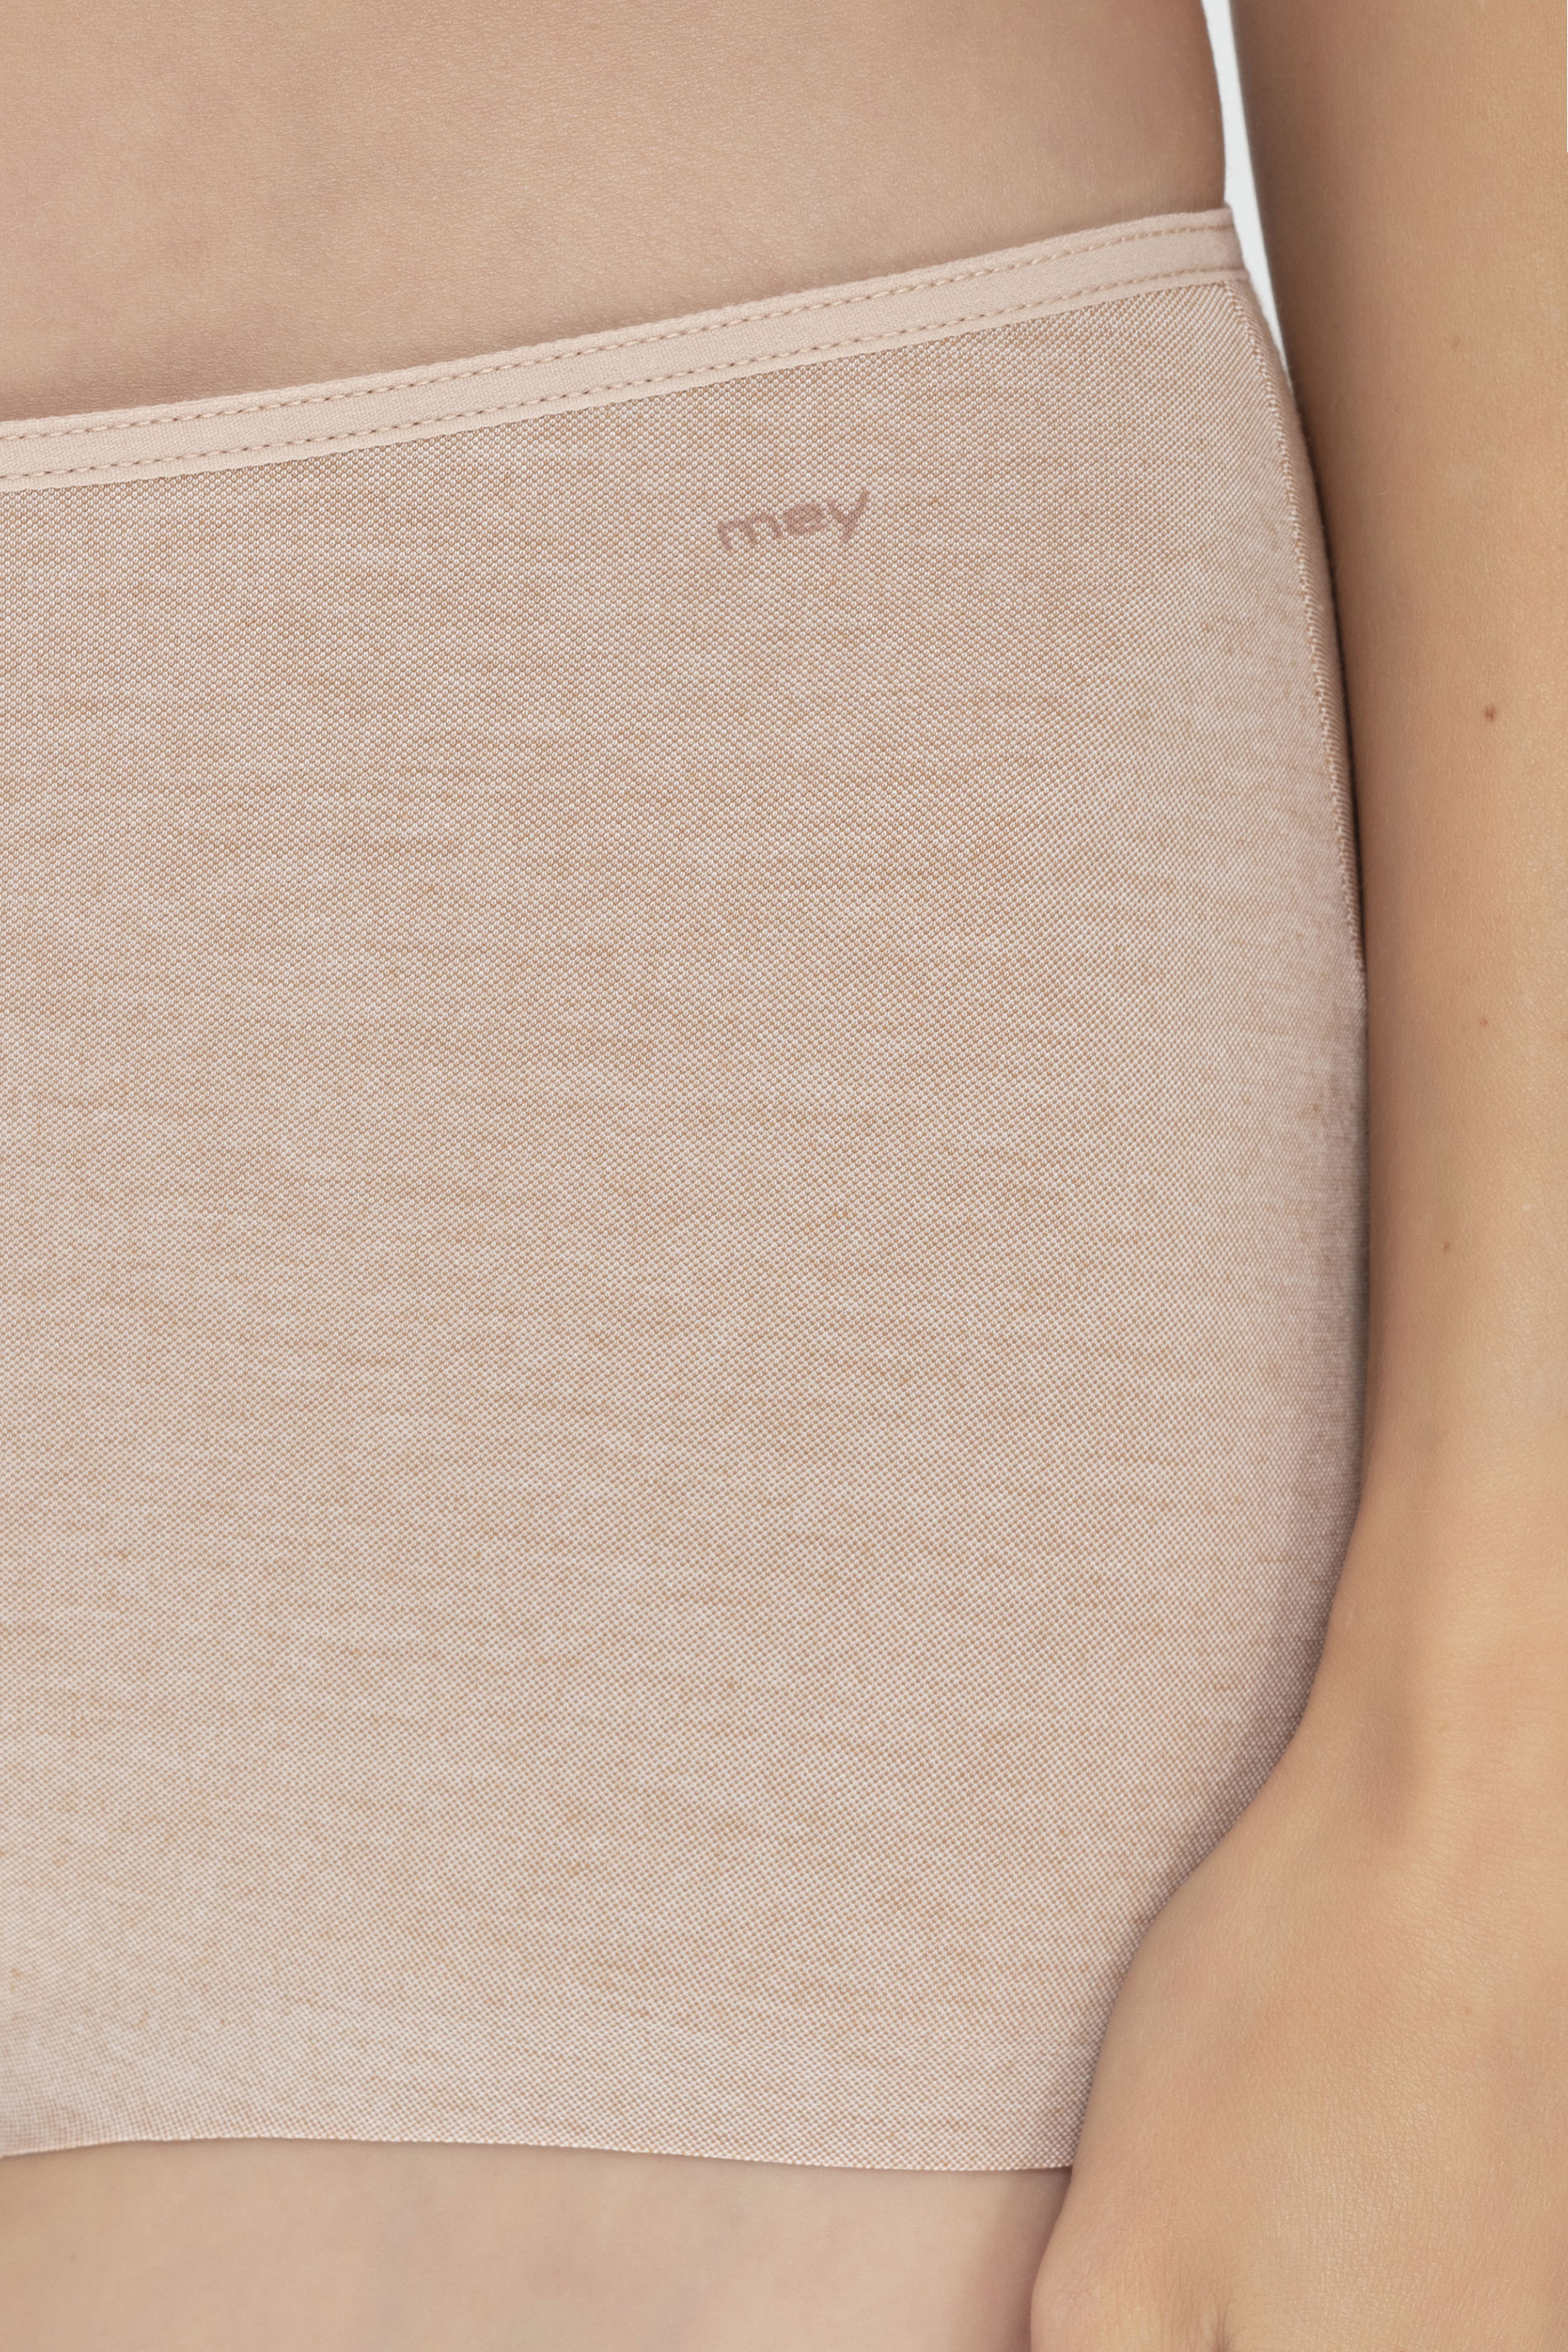 Panty Cream Tan Melange Serie Easy Cotton Detailweergave 01 | mey®